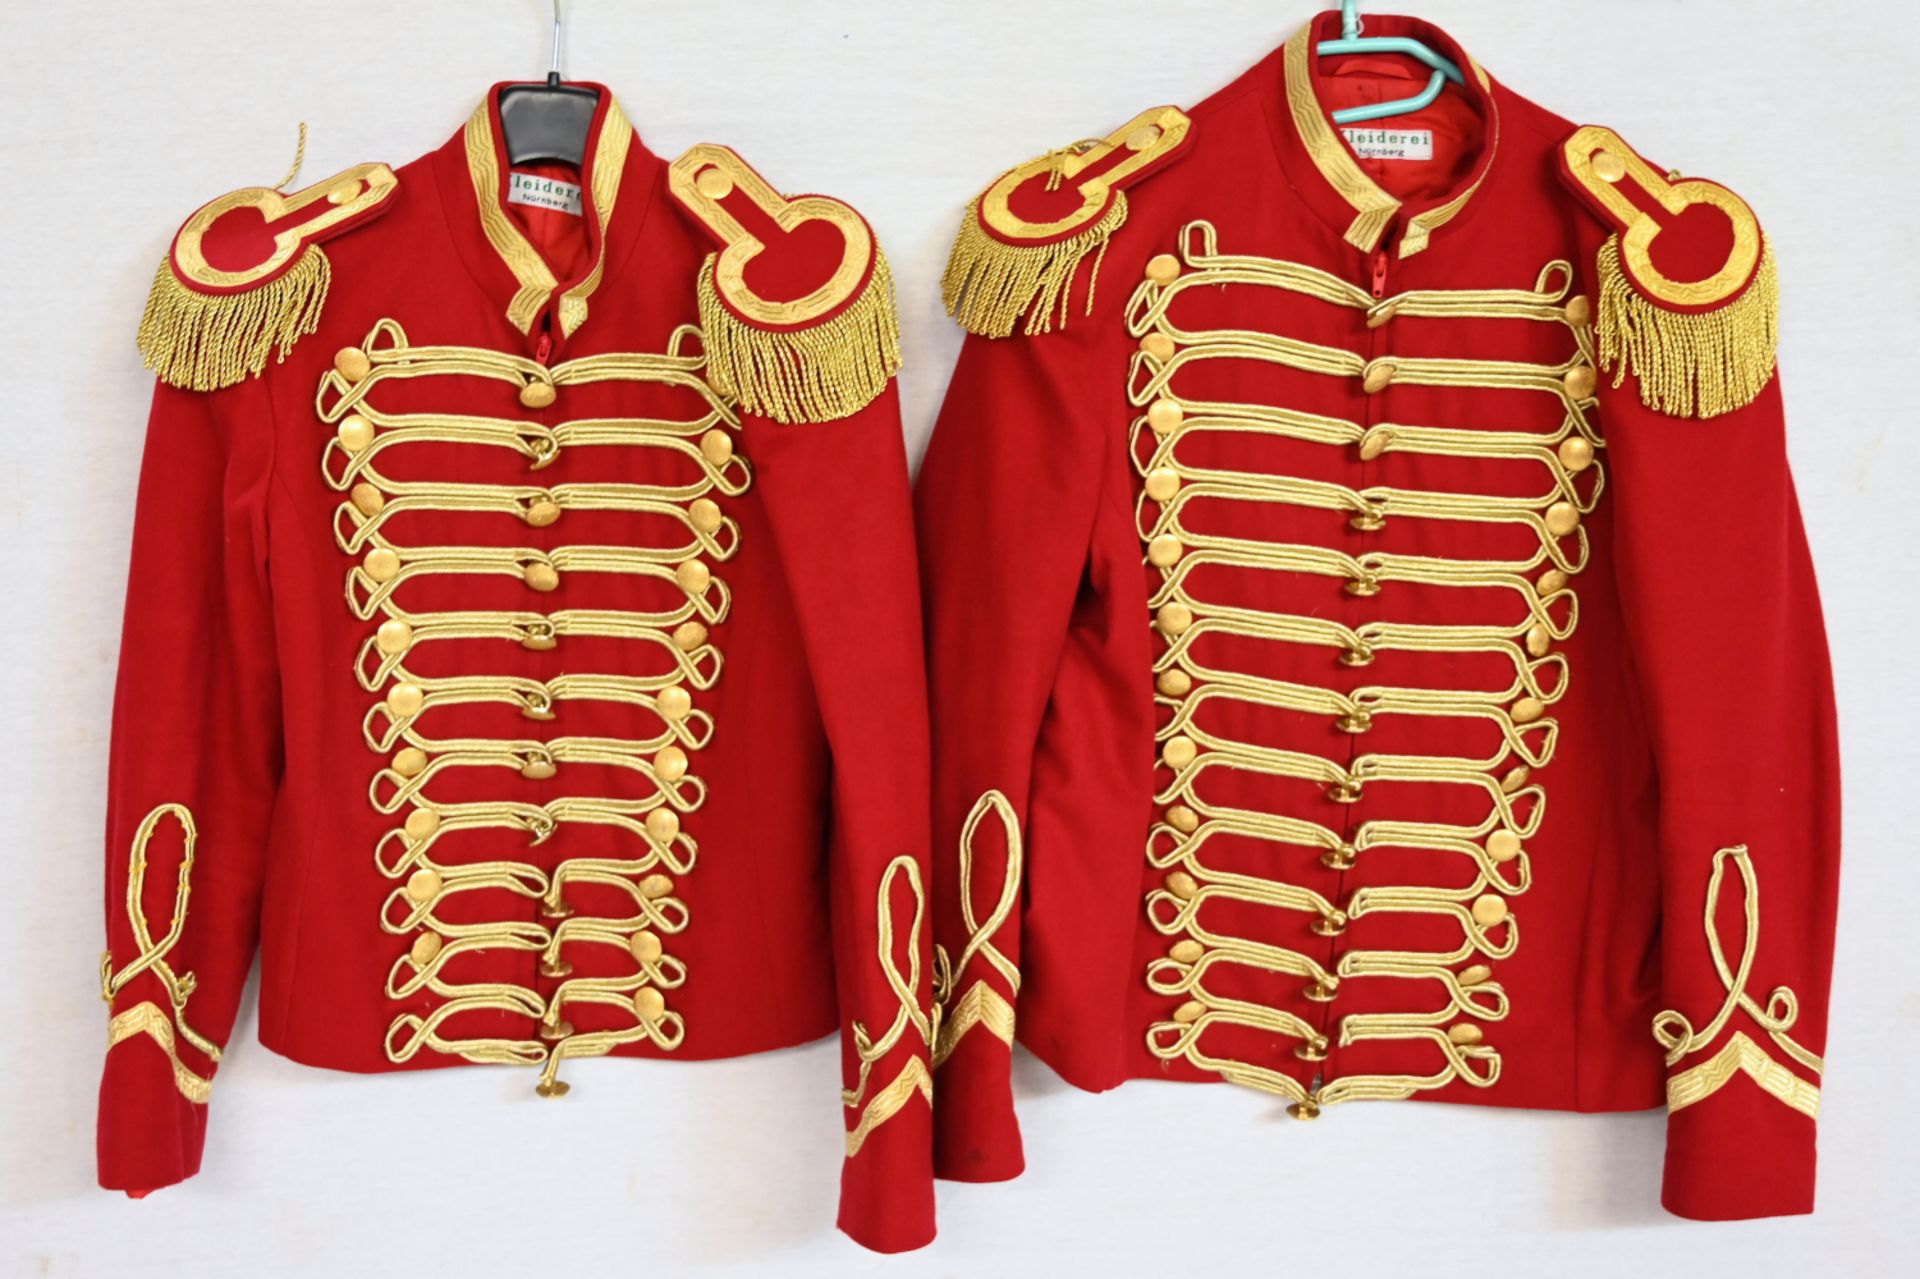 11 Pagenjacken rot m. goldener Verziehrung z.T. m. 2 Hosen, 1 Hemd sowie 3 Kappen "Kleiderei Nürnber